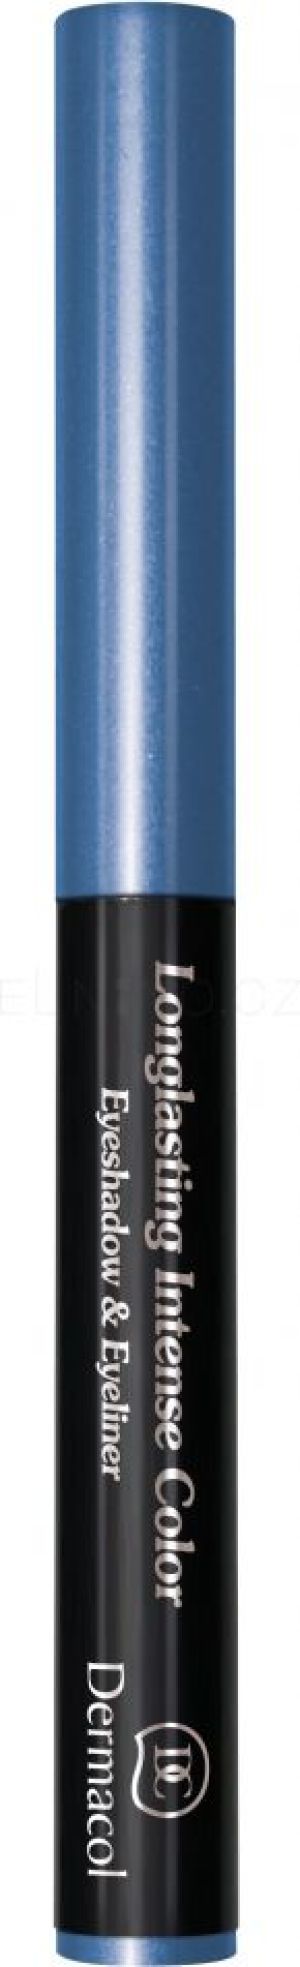 Dermacol Long-Lasting Intense Colour Eyeshadow & Eyeliner W 1.6g 03 1